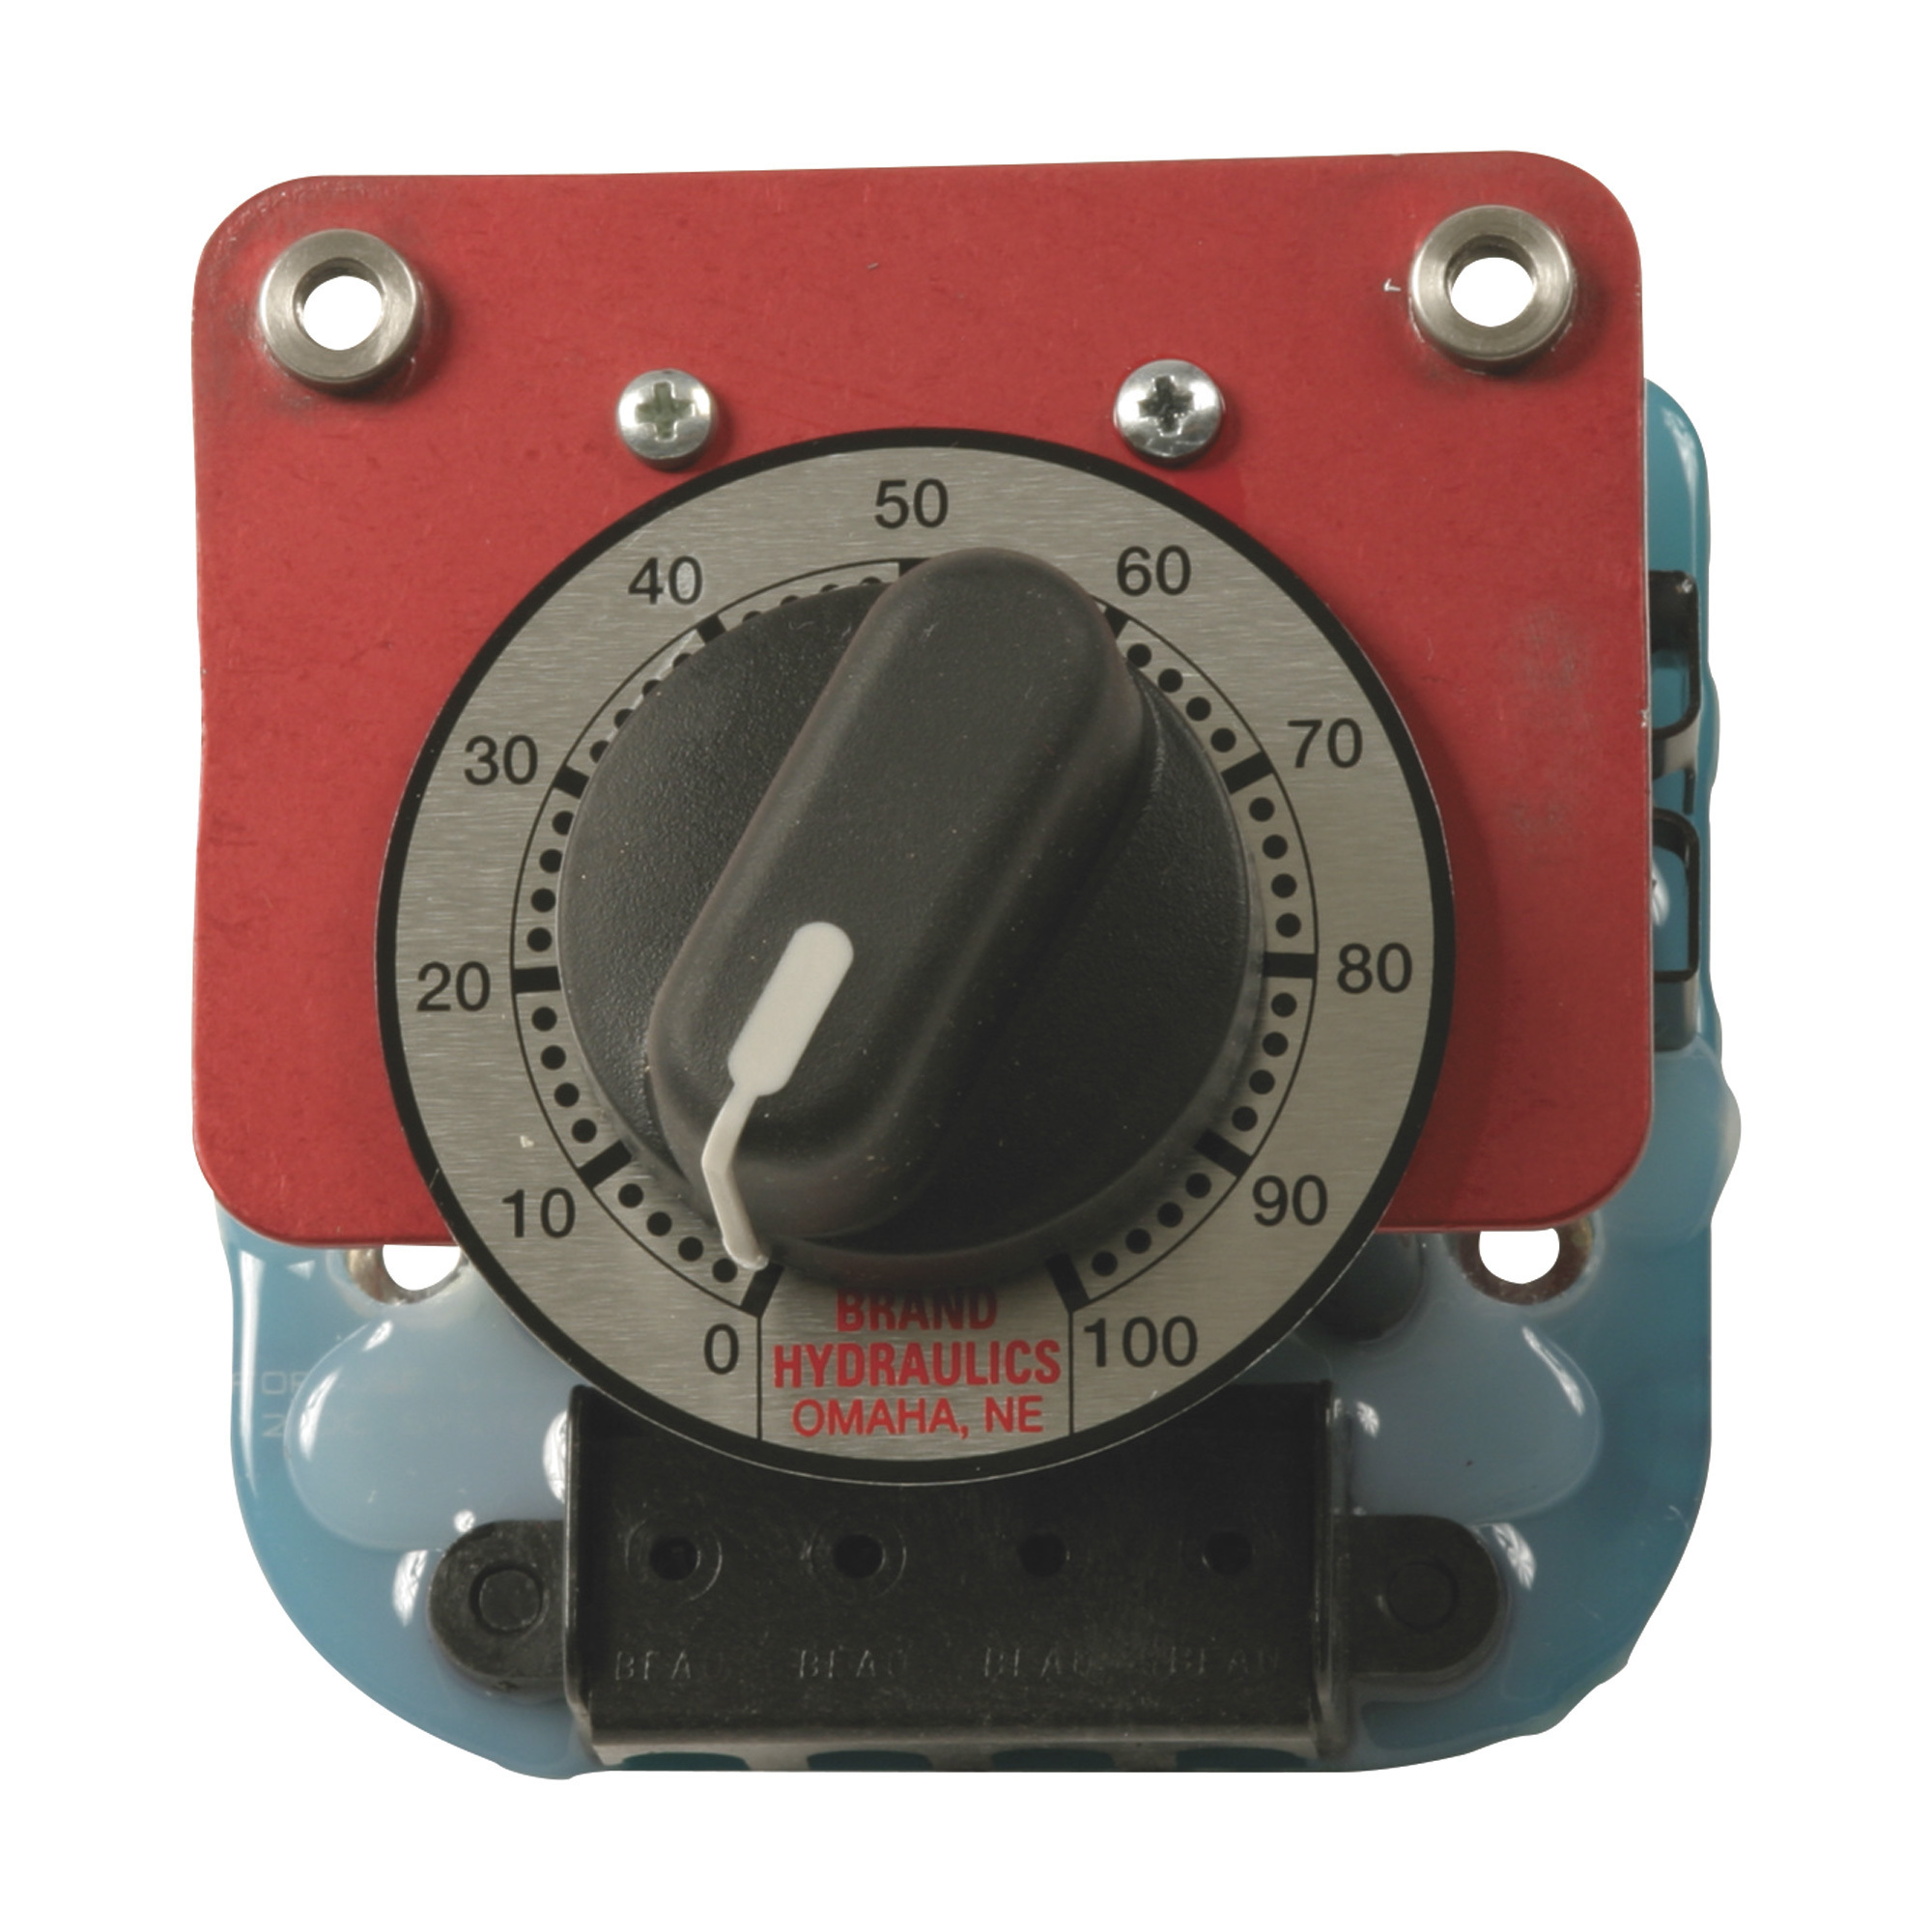 Brand Hydraulics 12 VDC Electronic Panel Mount Controller, Model# EC-12-02  eBay